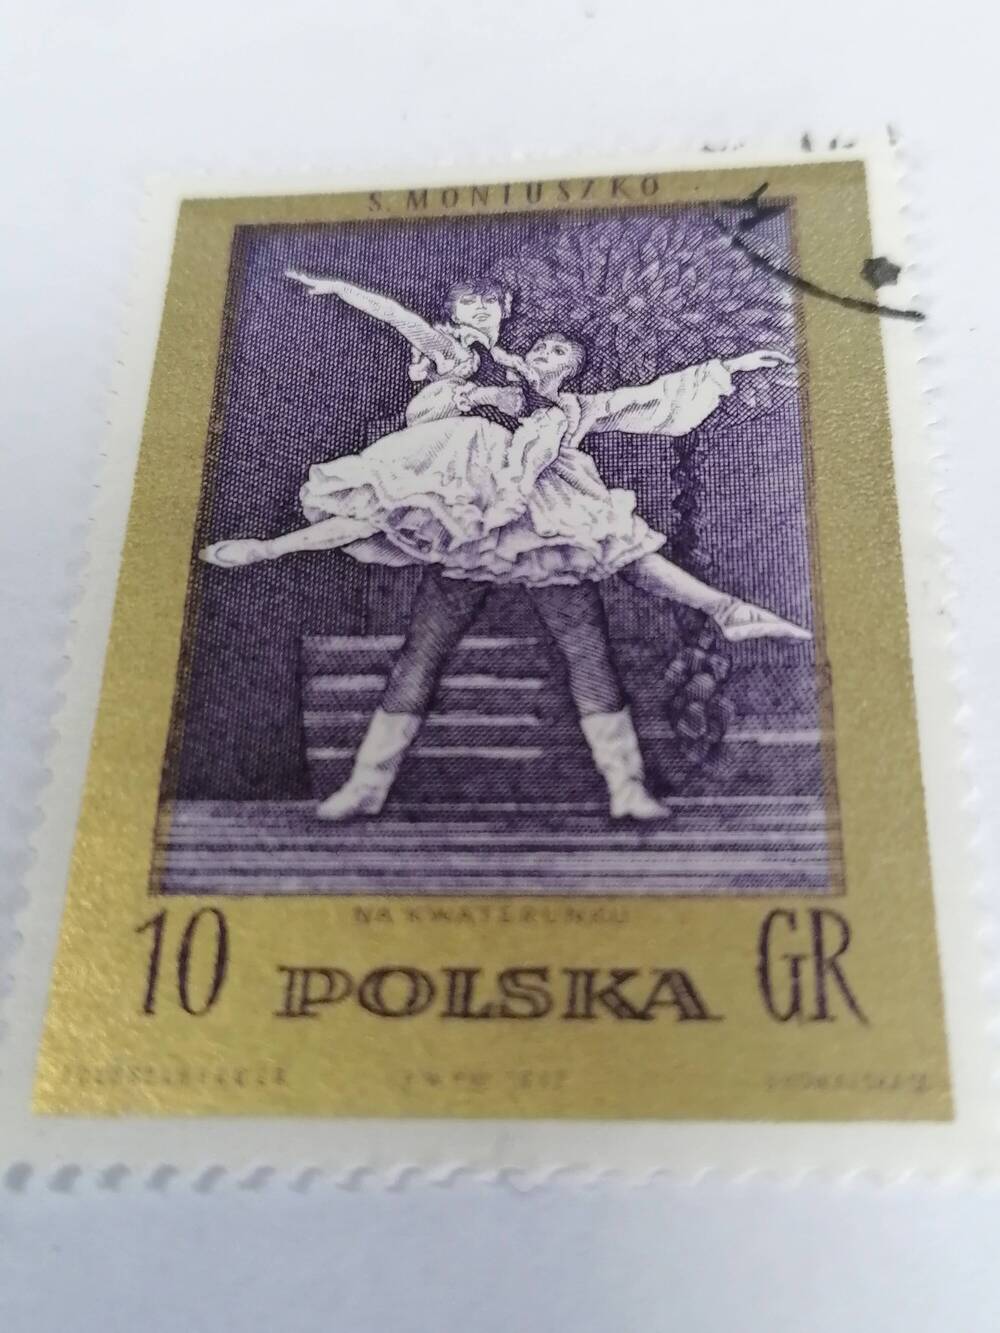 Марка почтовая гашеная, Polska,Польша,1972г,S.Monioszko Na kwaternku